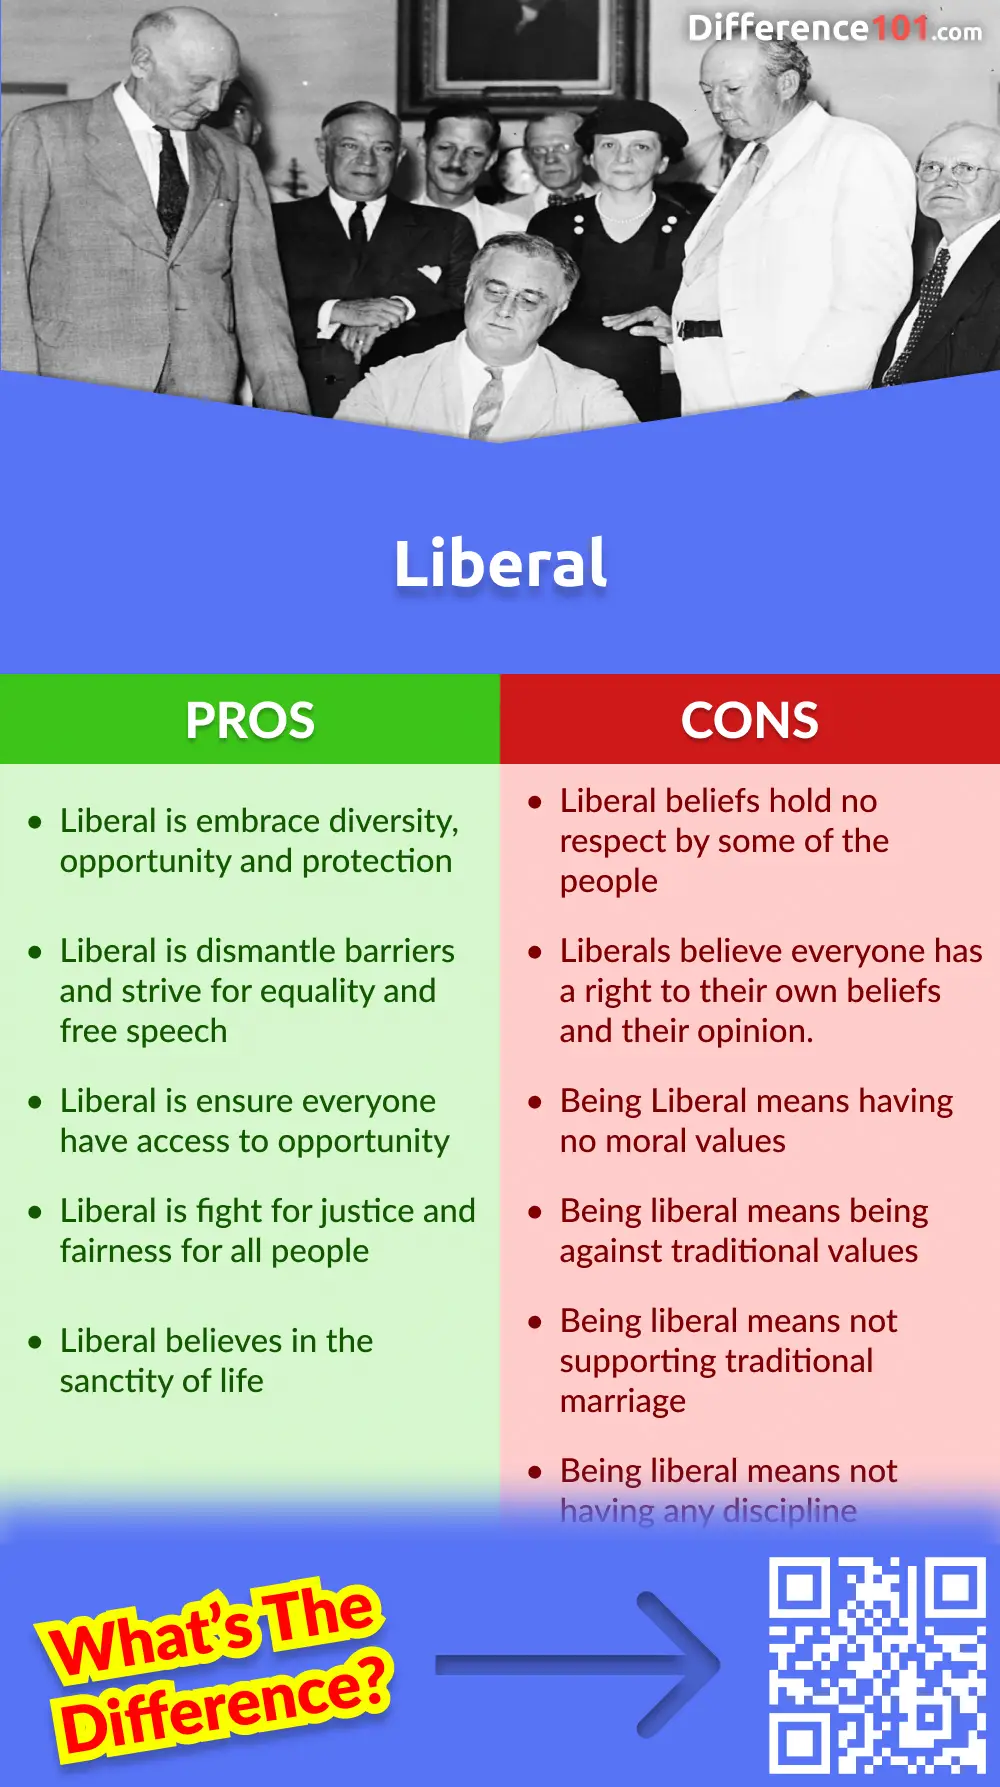 Liberal Pros & Cons
